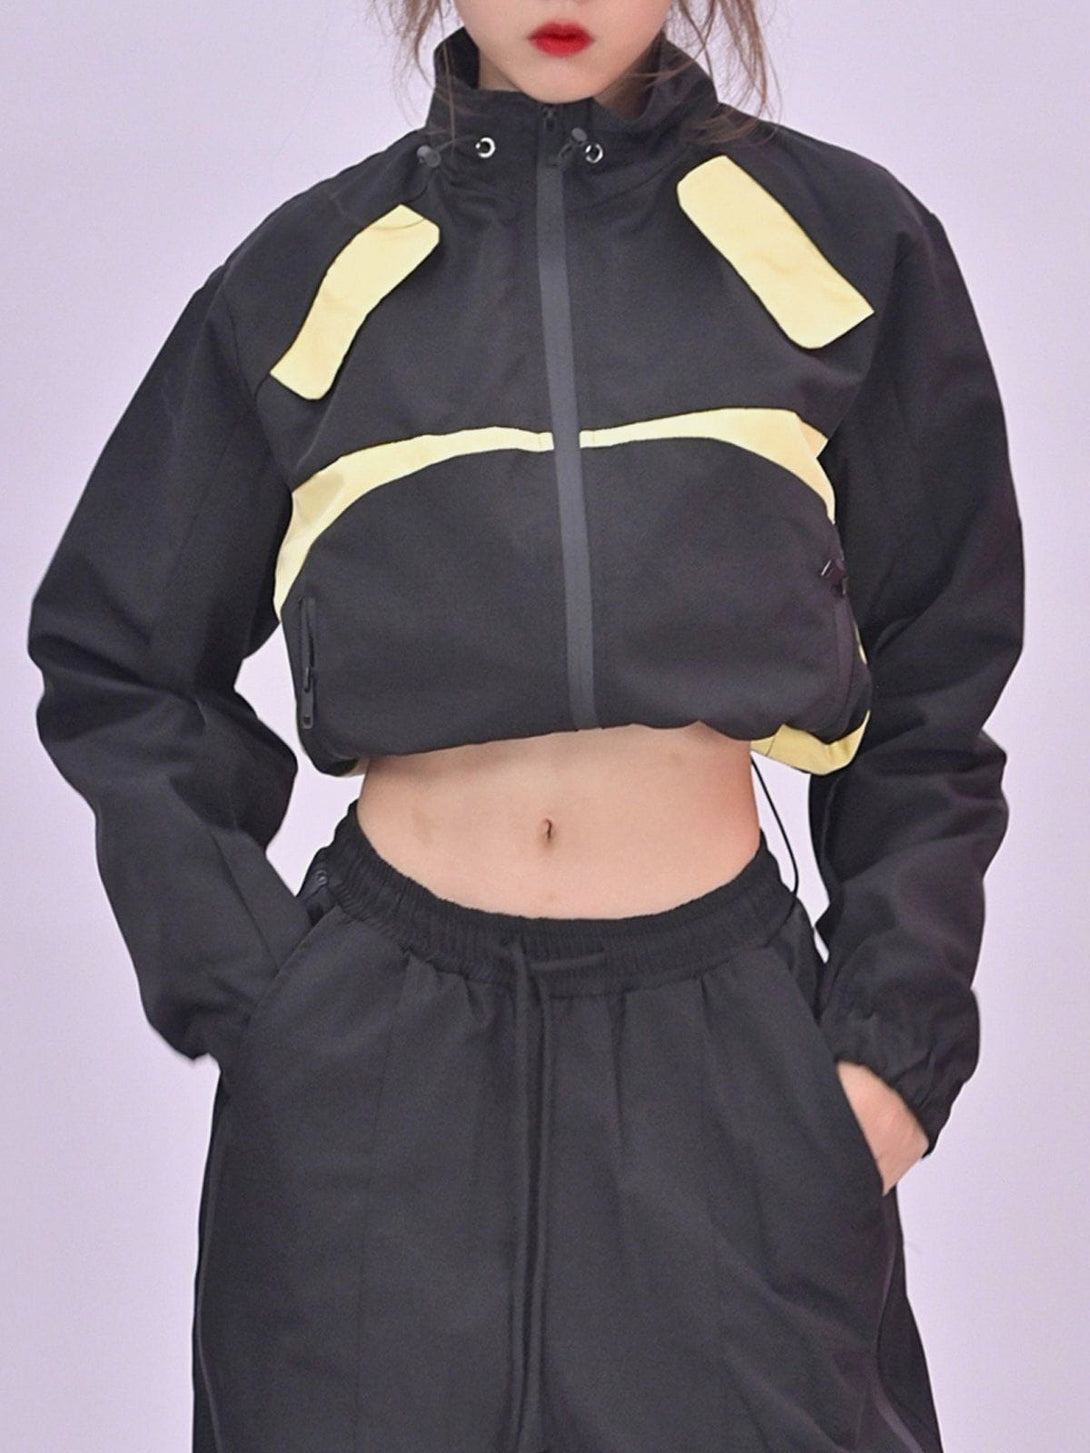 Majesda® - Colorblock Cropped Outdoor Jacket outfit ideas, streetwear fashion - majesda.com